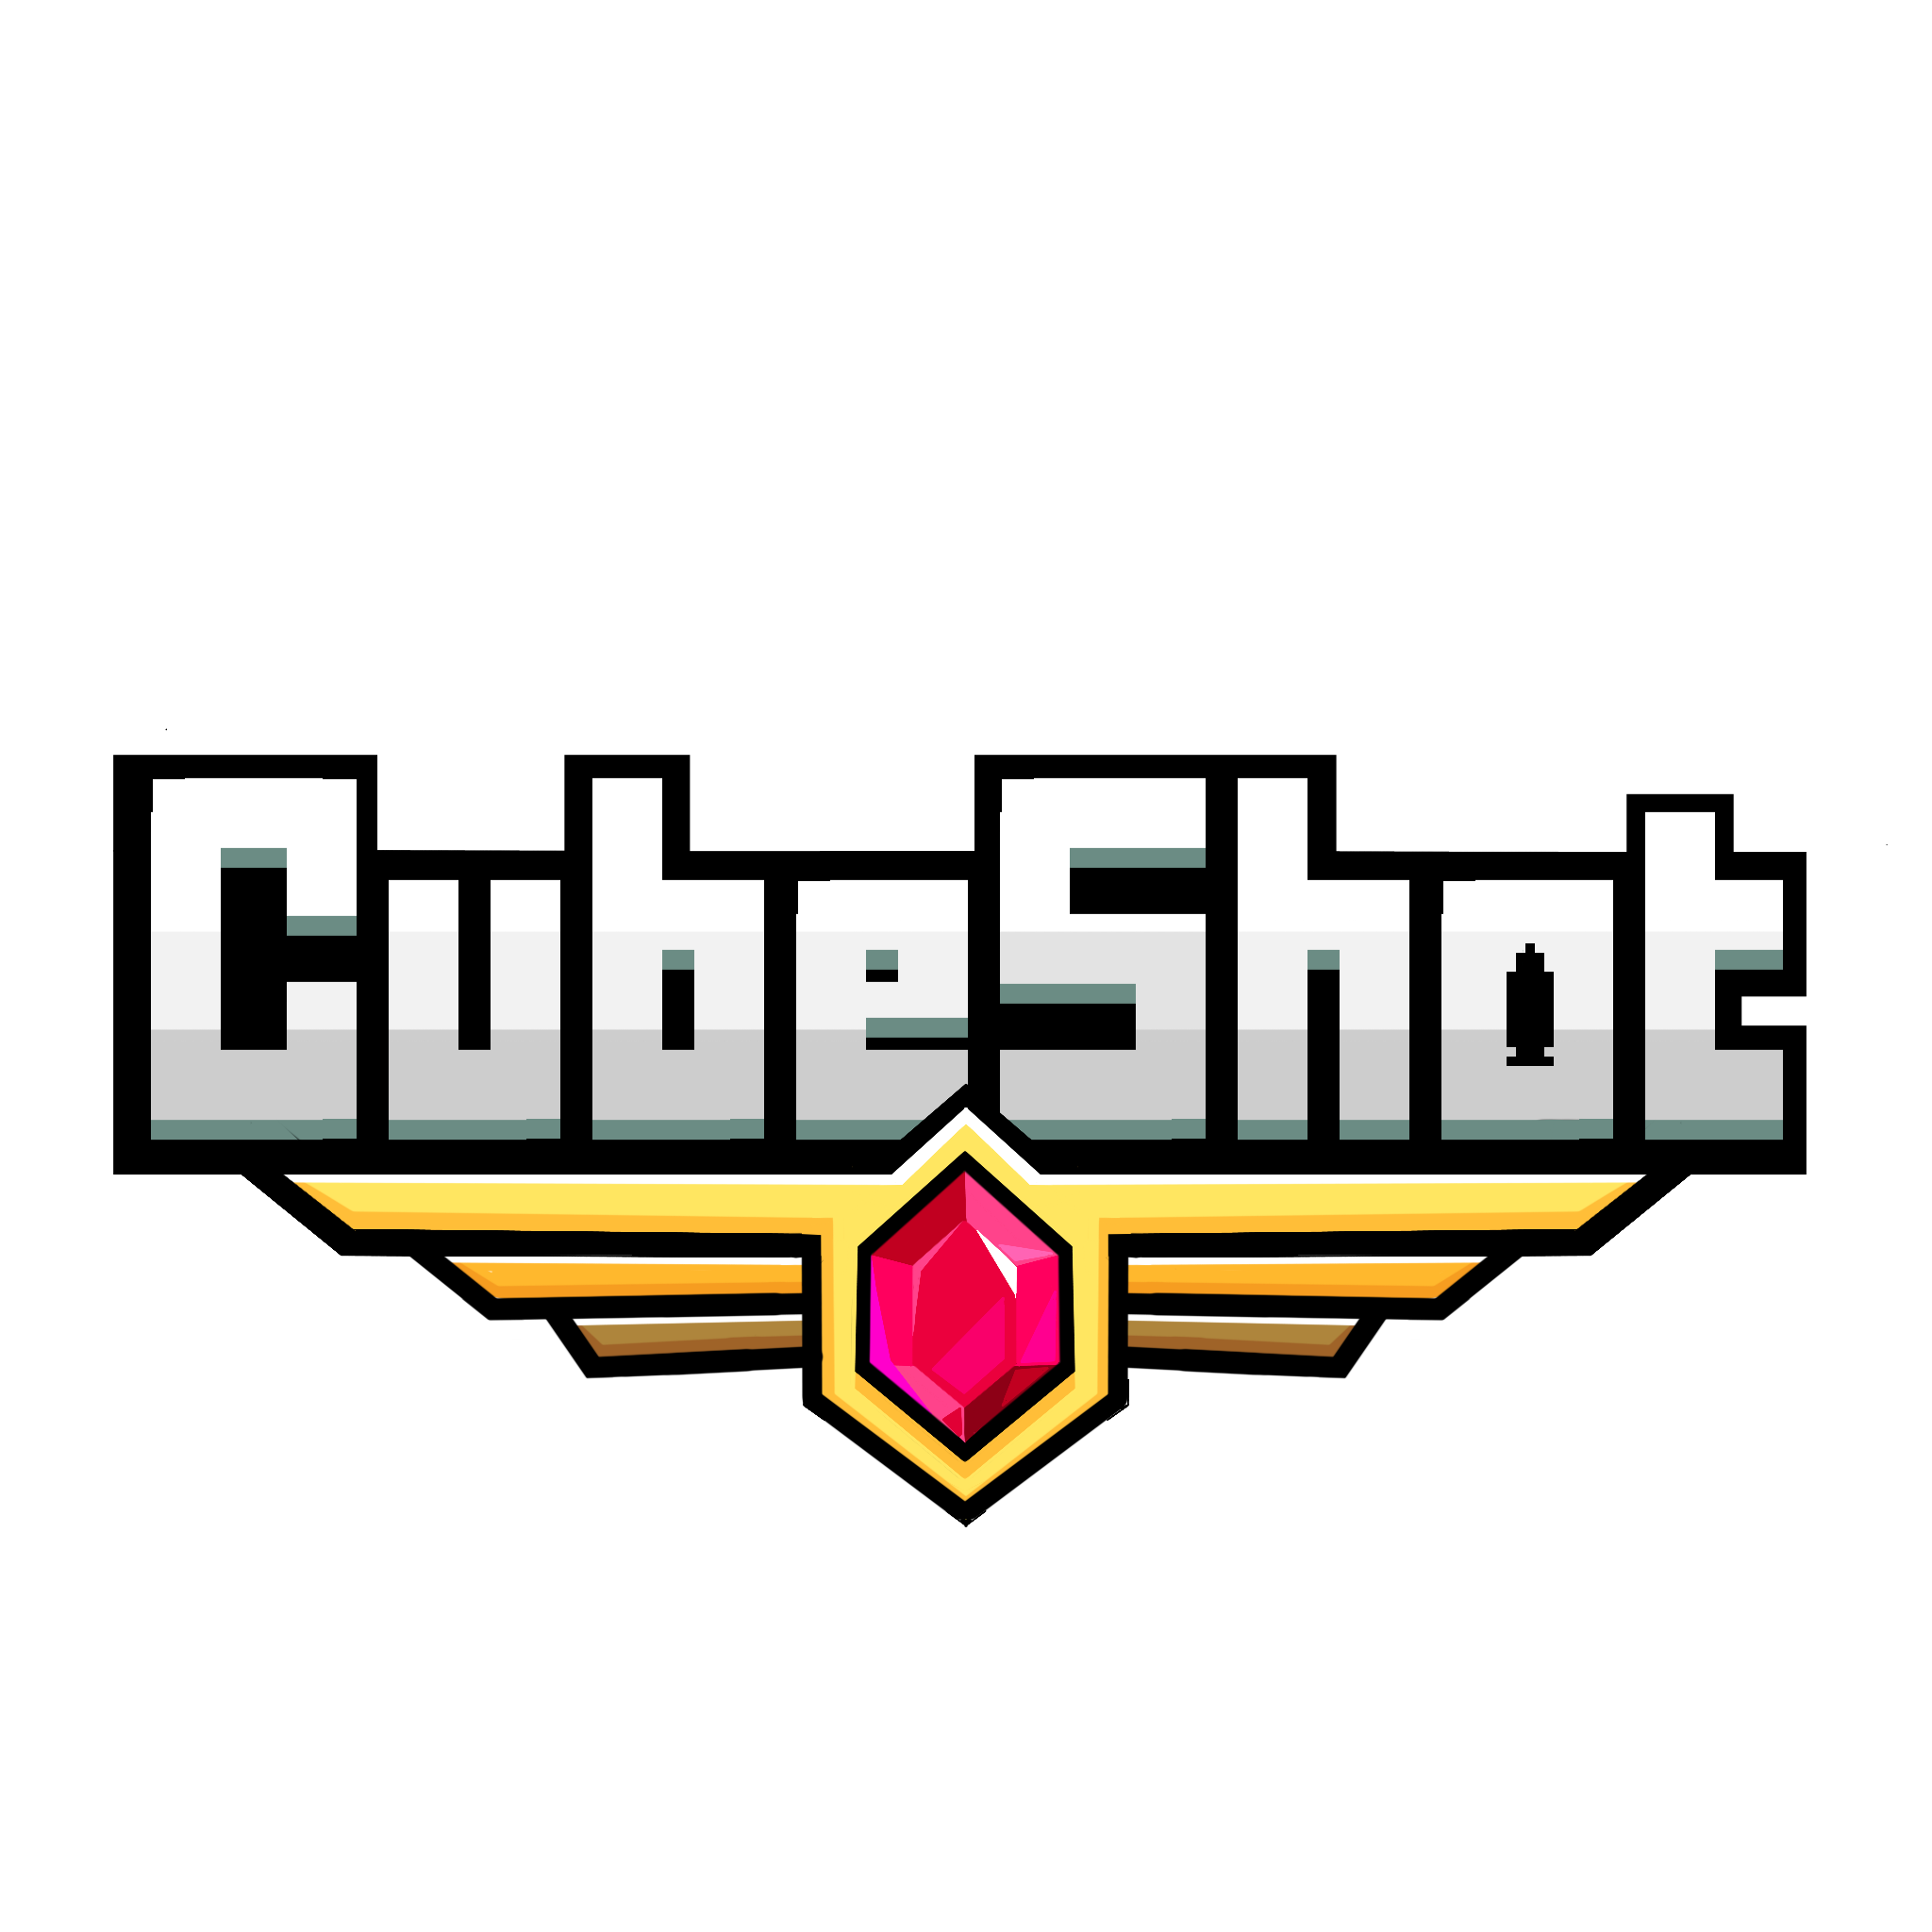 Cubeshot.io - Play Cubeshot io on Kevin Games